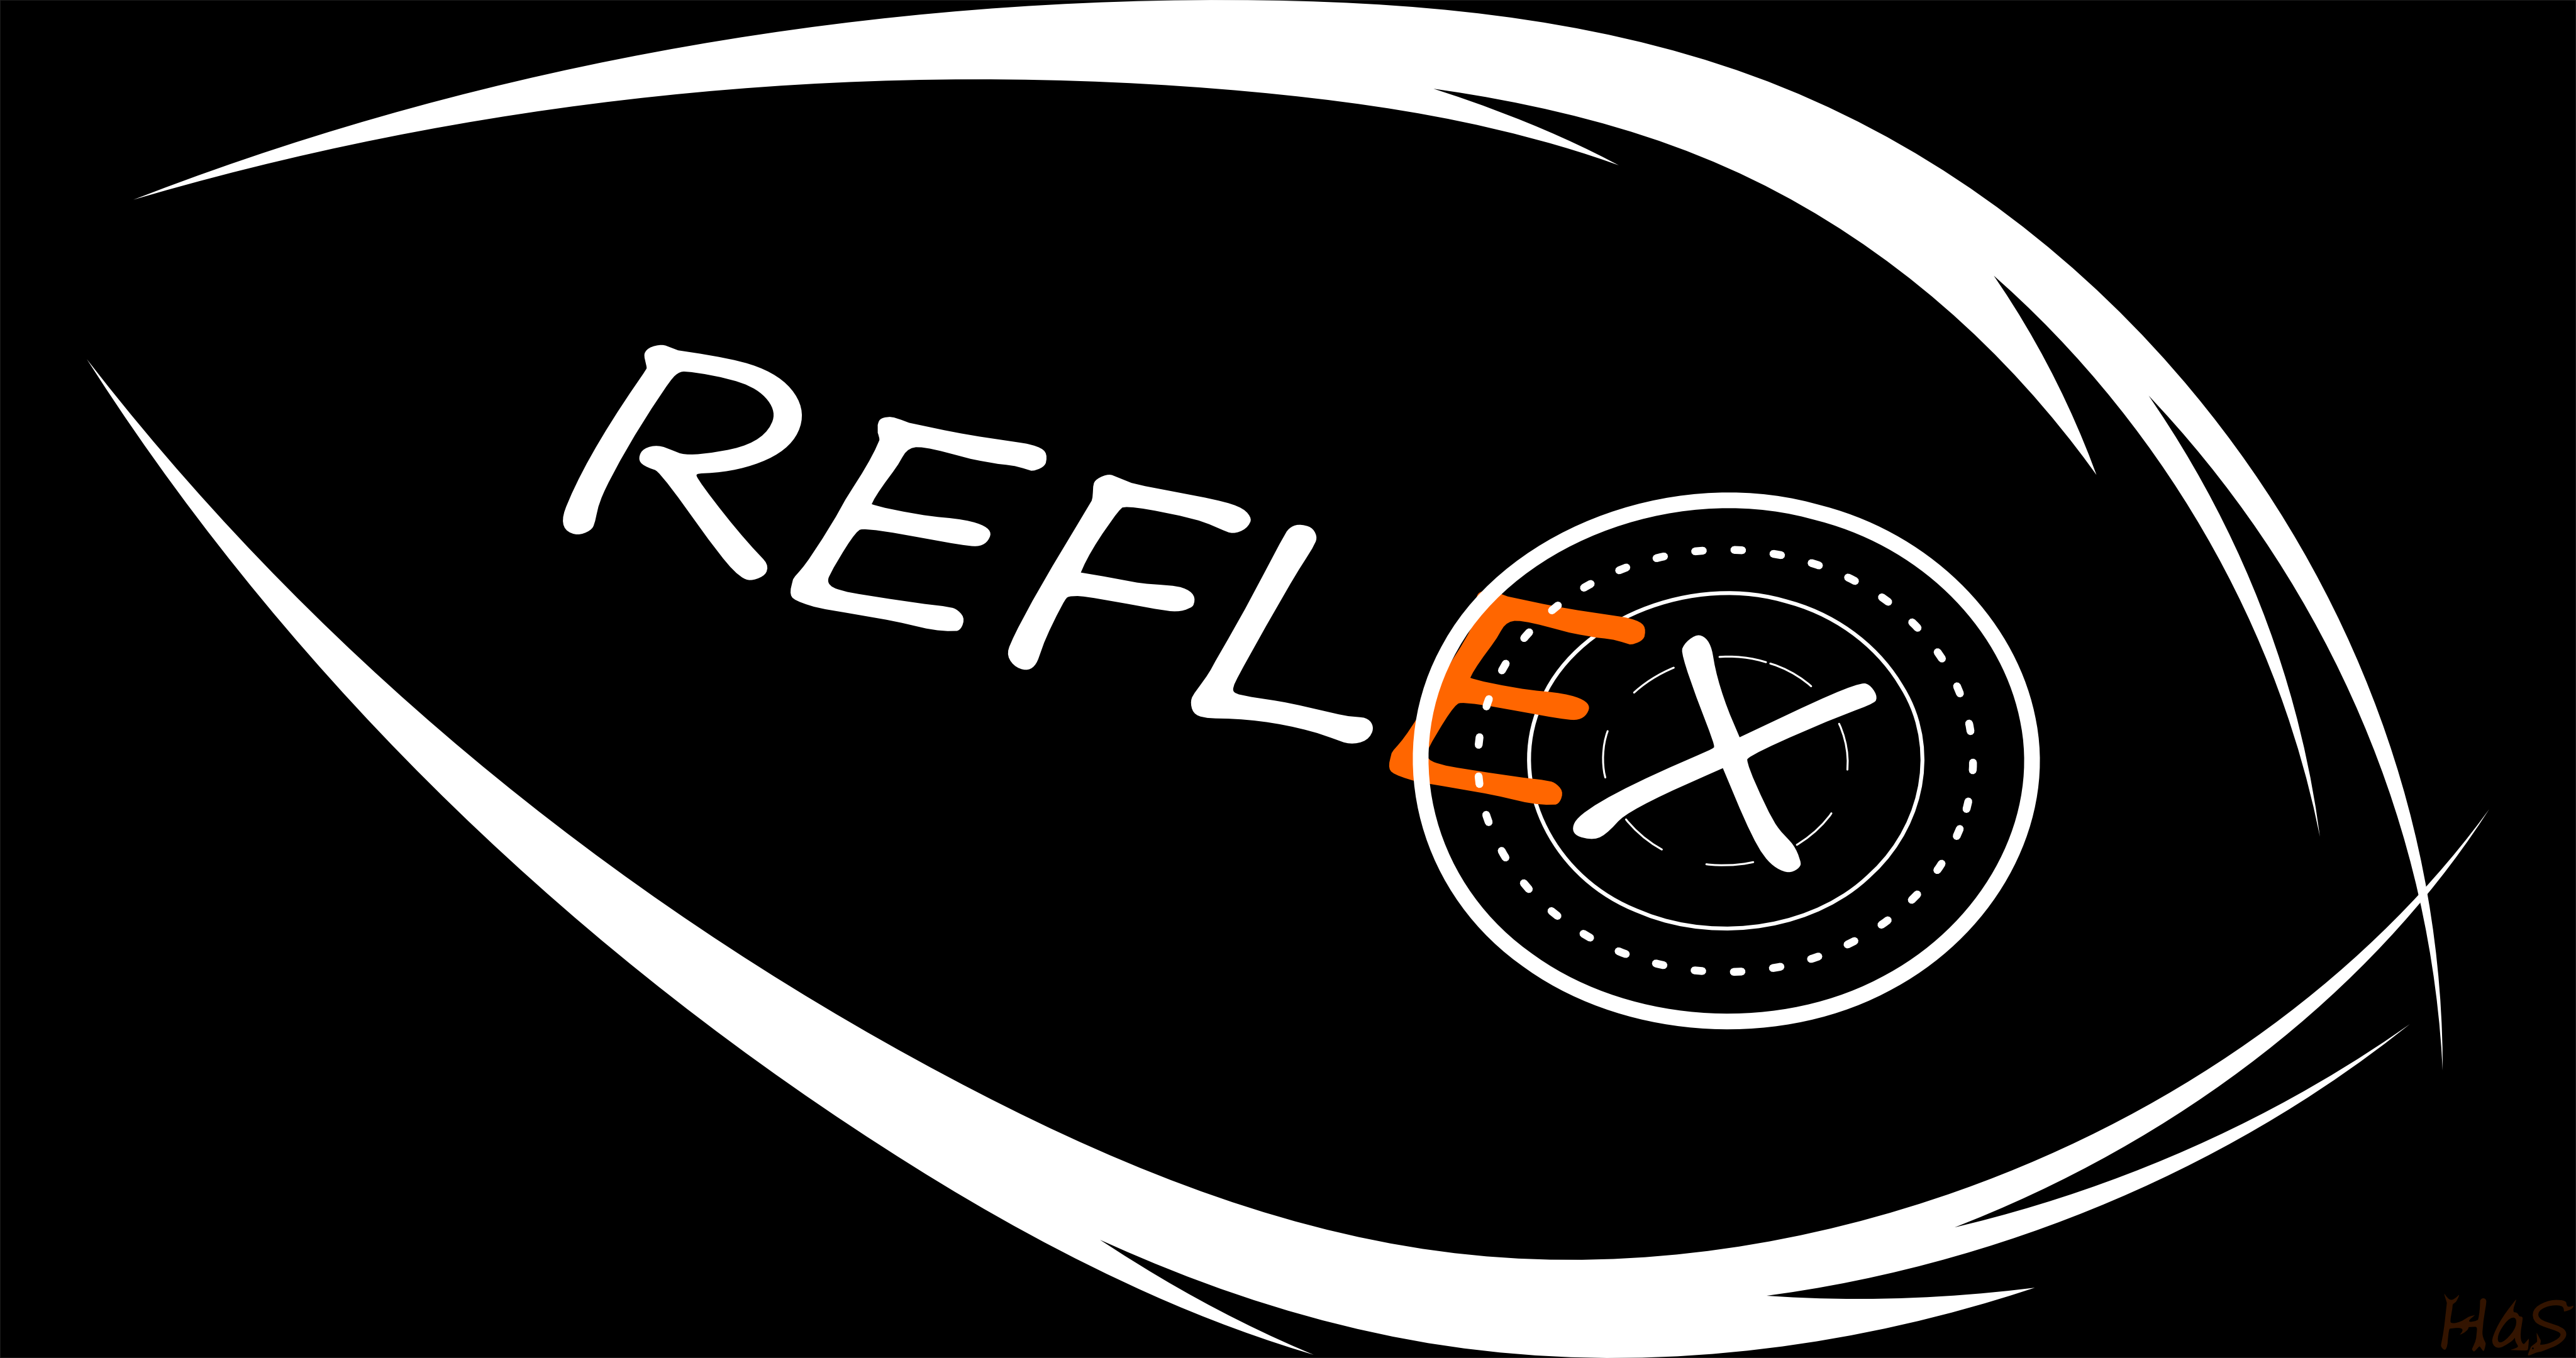 Reflex 4k Ultra HD Wallpaper Background Image Id